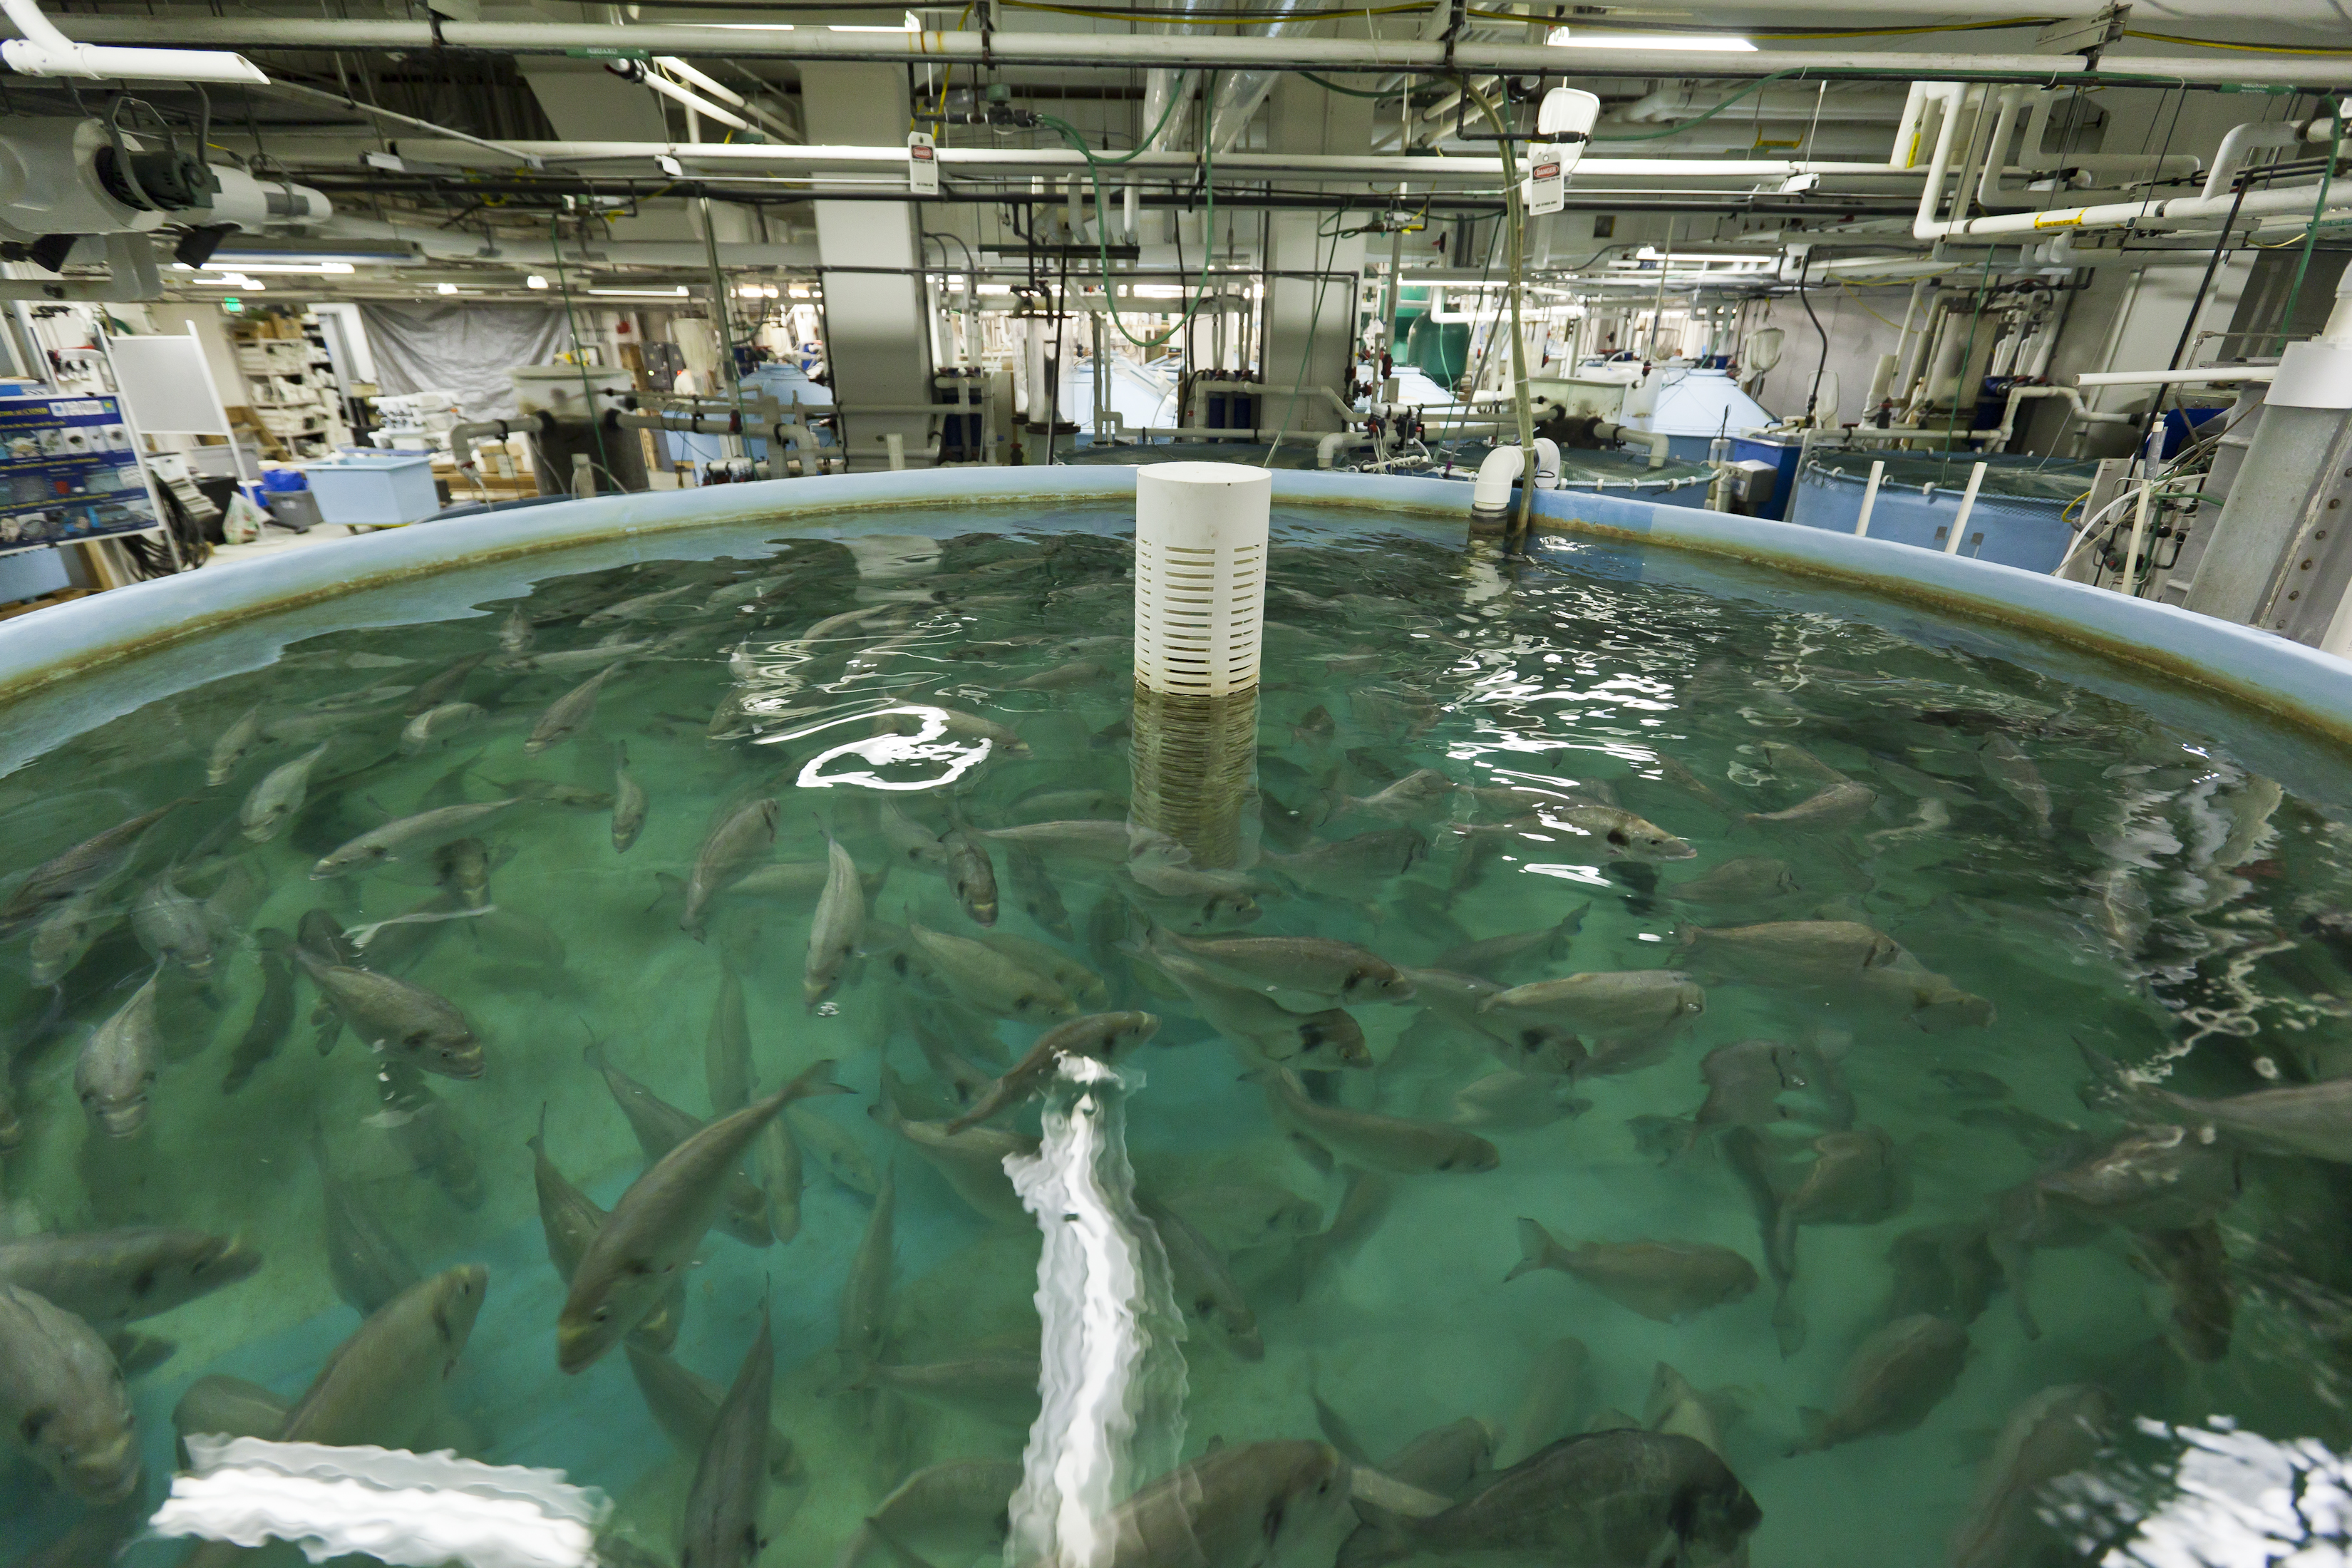 School of fish swimming in a large circular tank